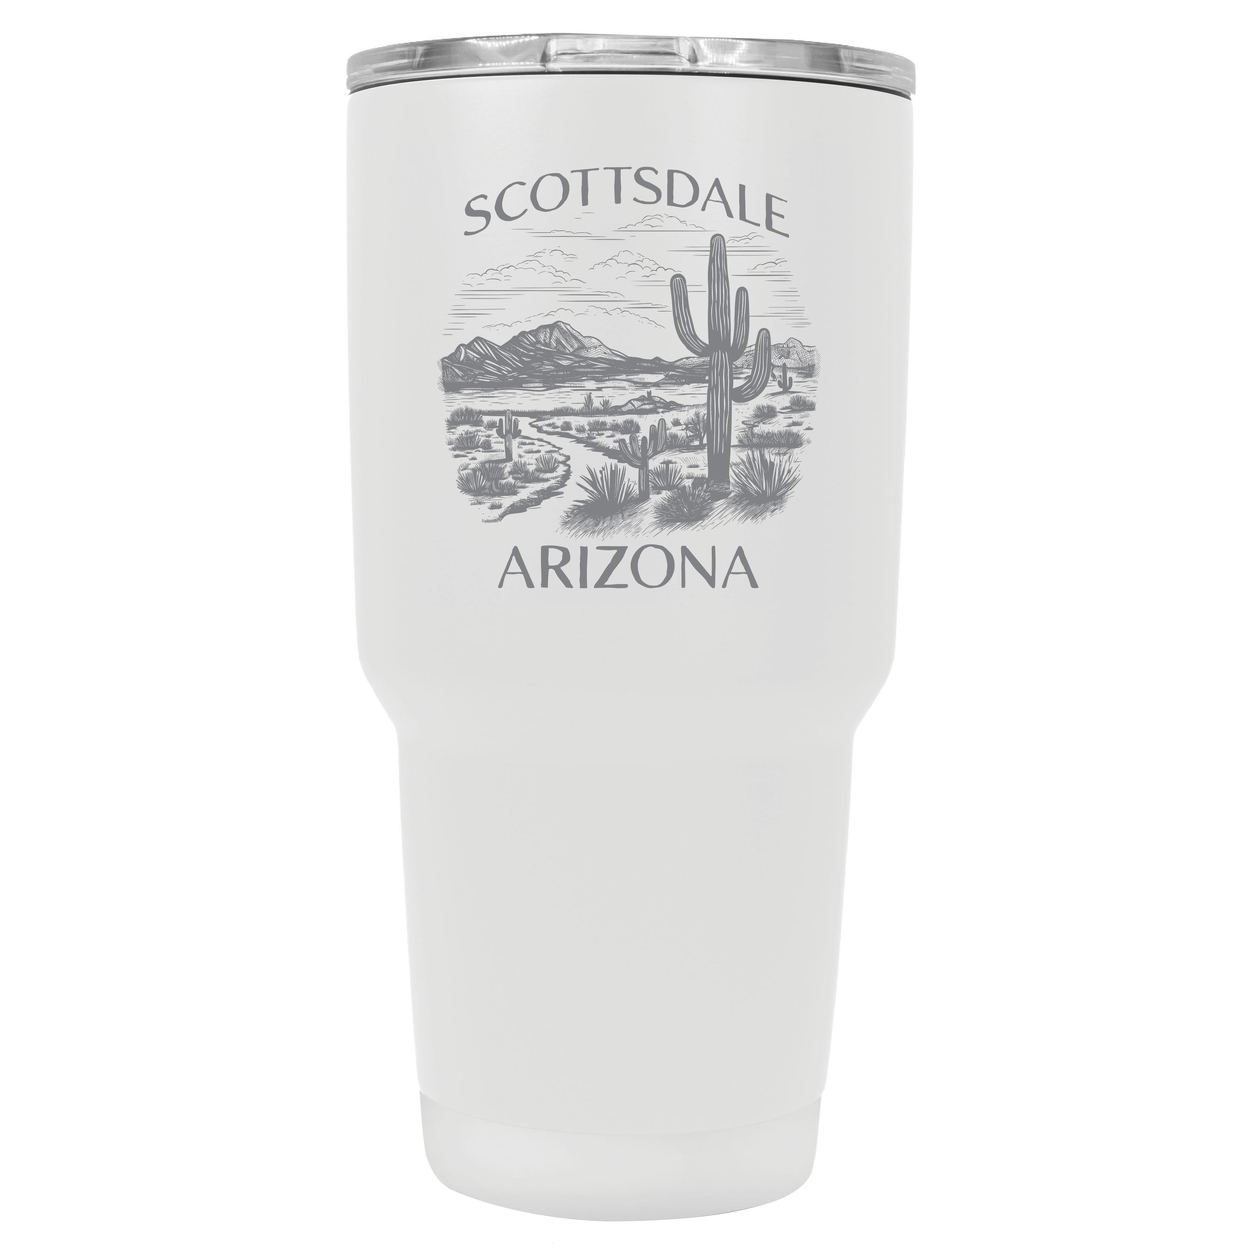 Scottsdale Arizona Souvenir 24 Oz Engraved Insulated Stainless Steel Tumbler - White,,4-Pack